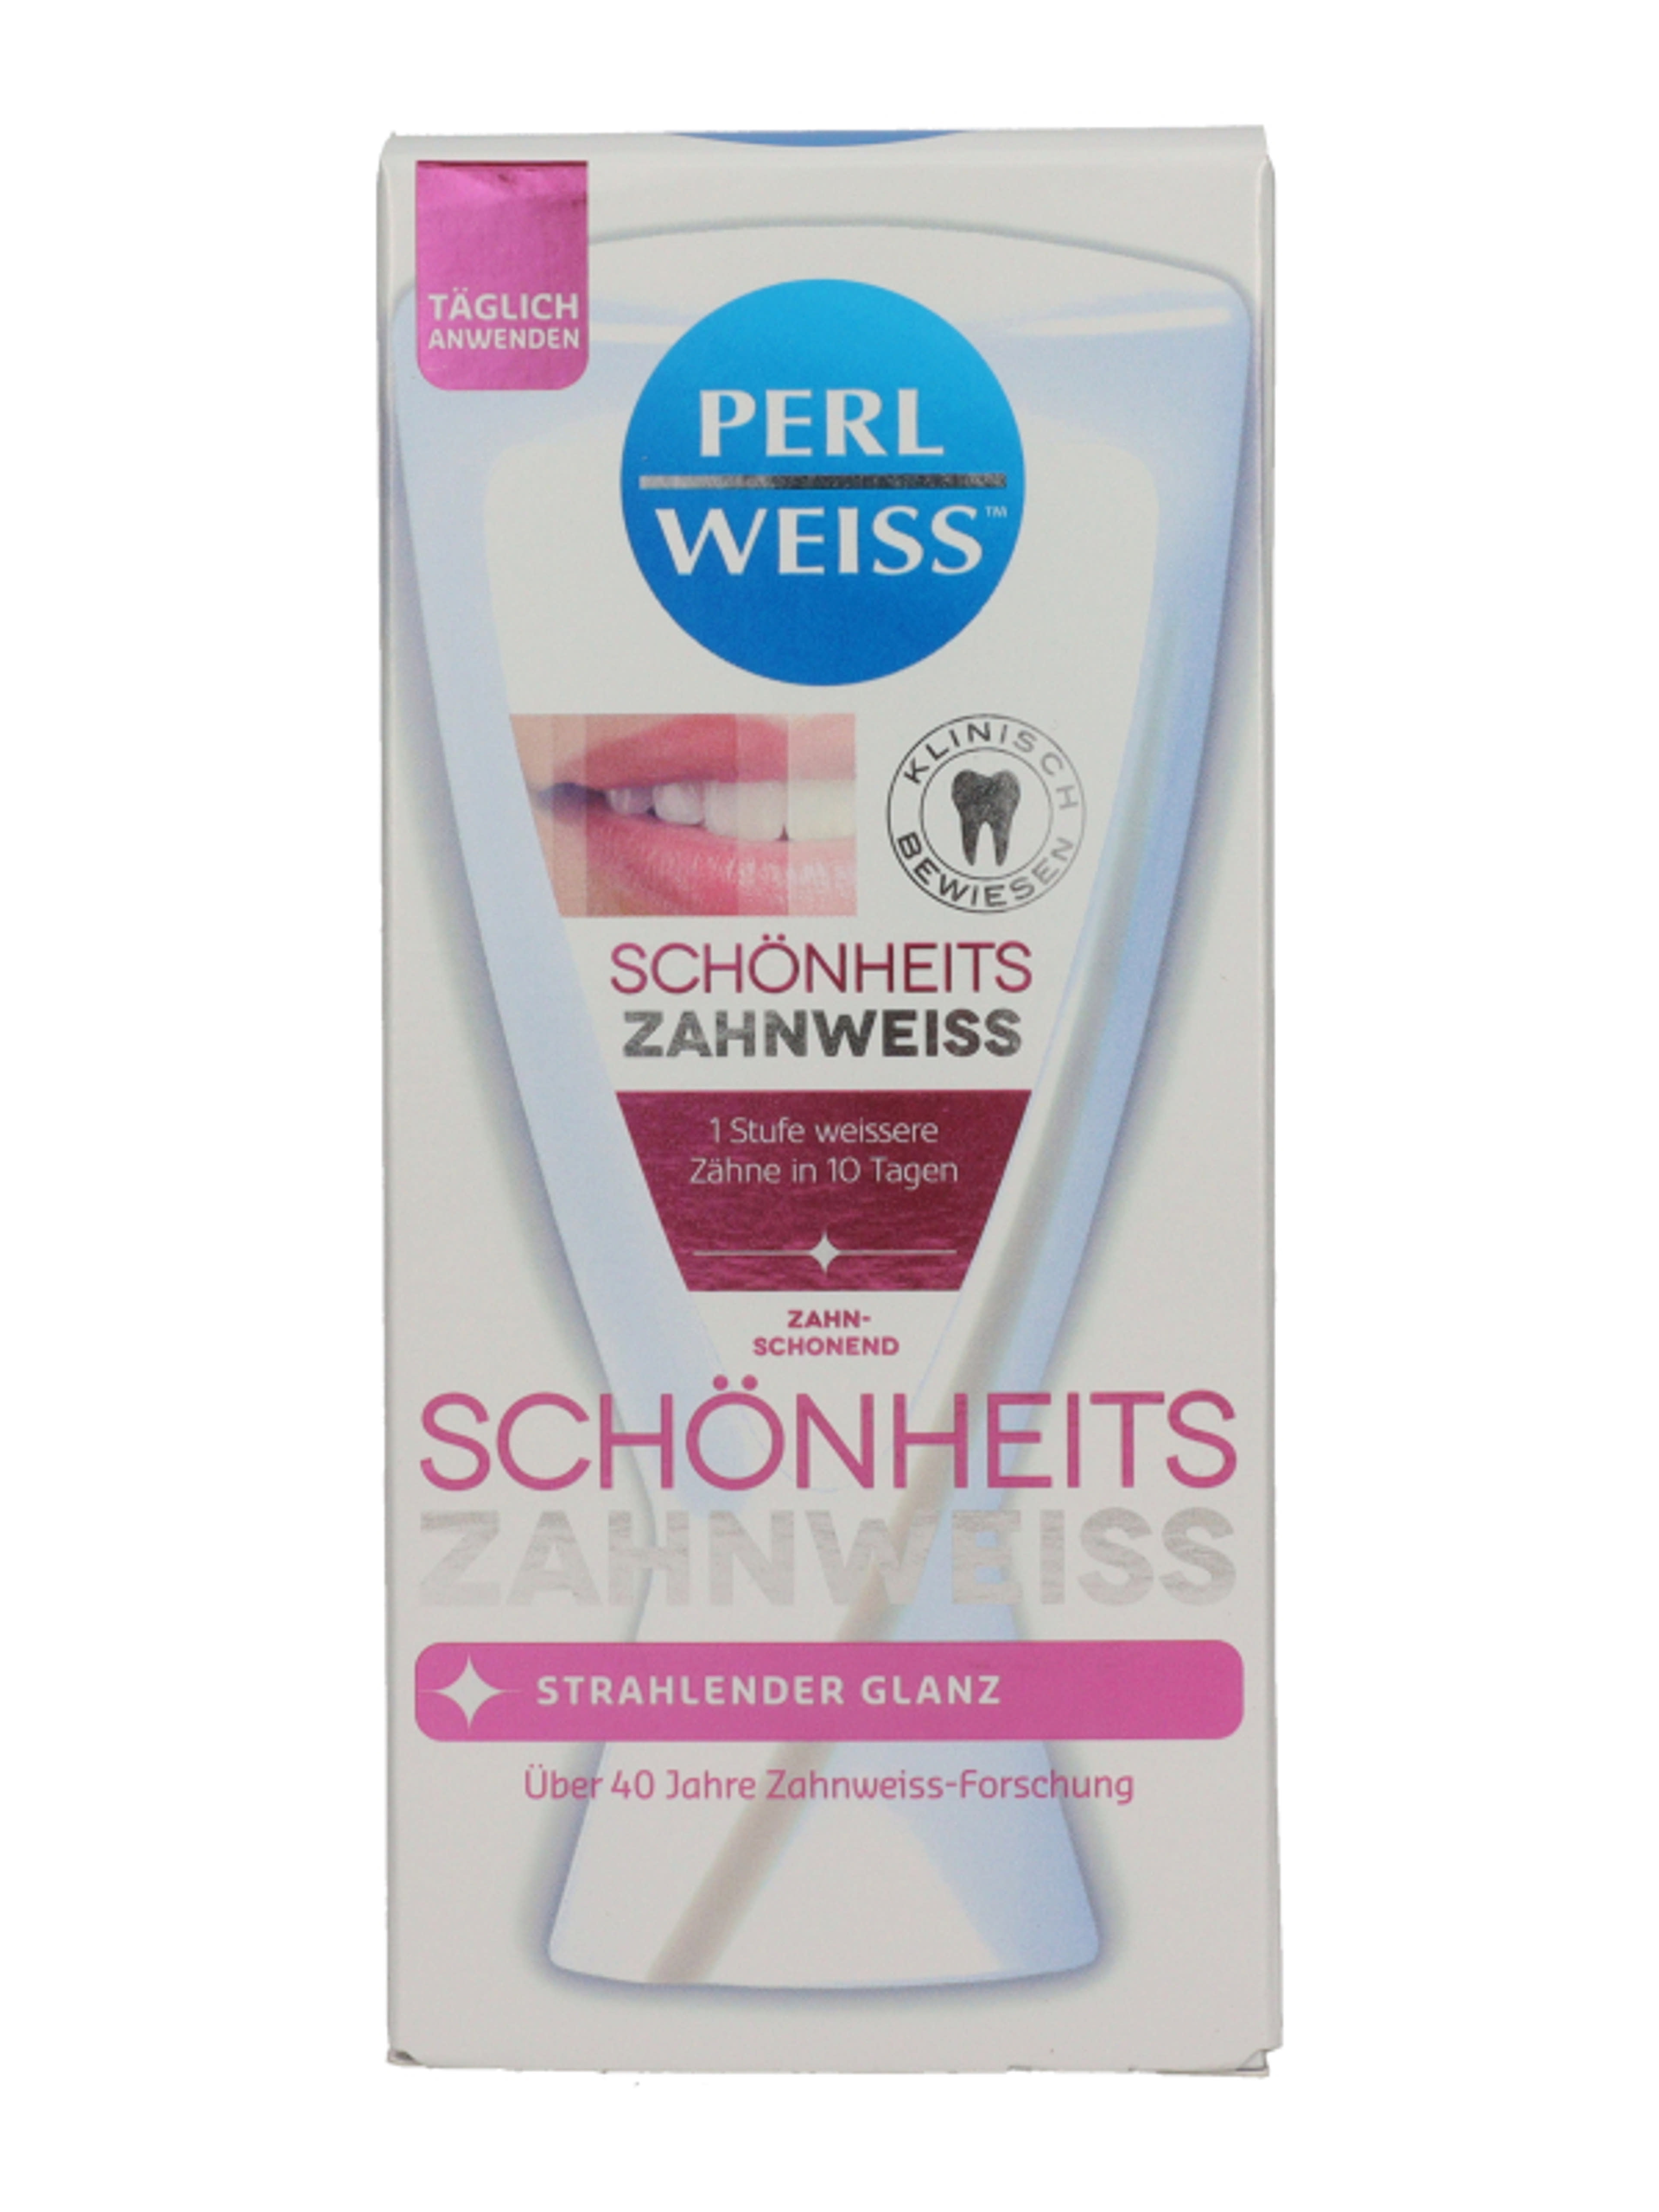 Perlweiss Schönheits fogfehérítő fogkrém - 50 ml